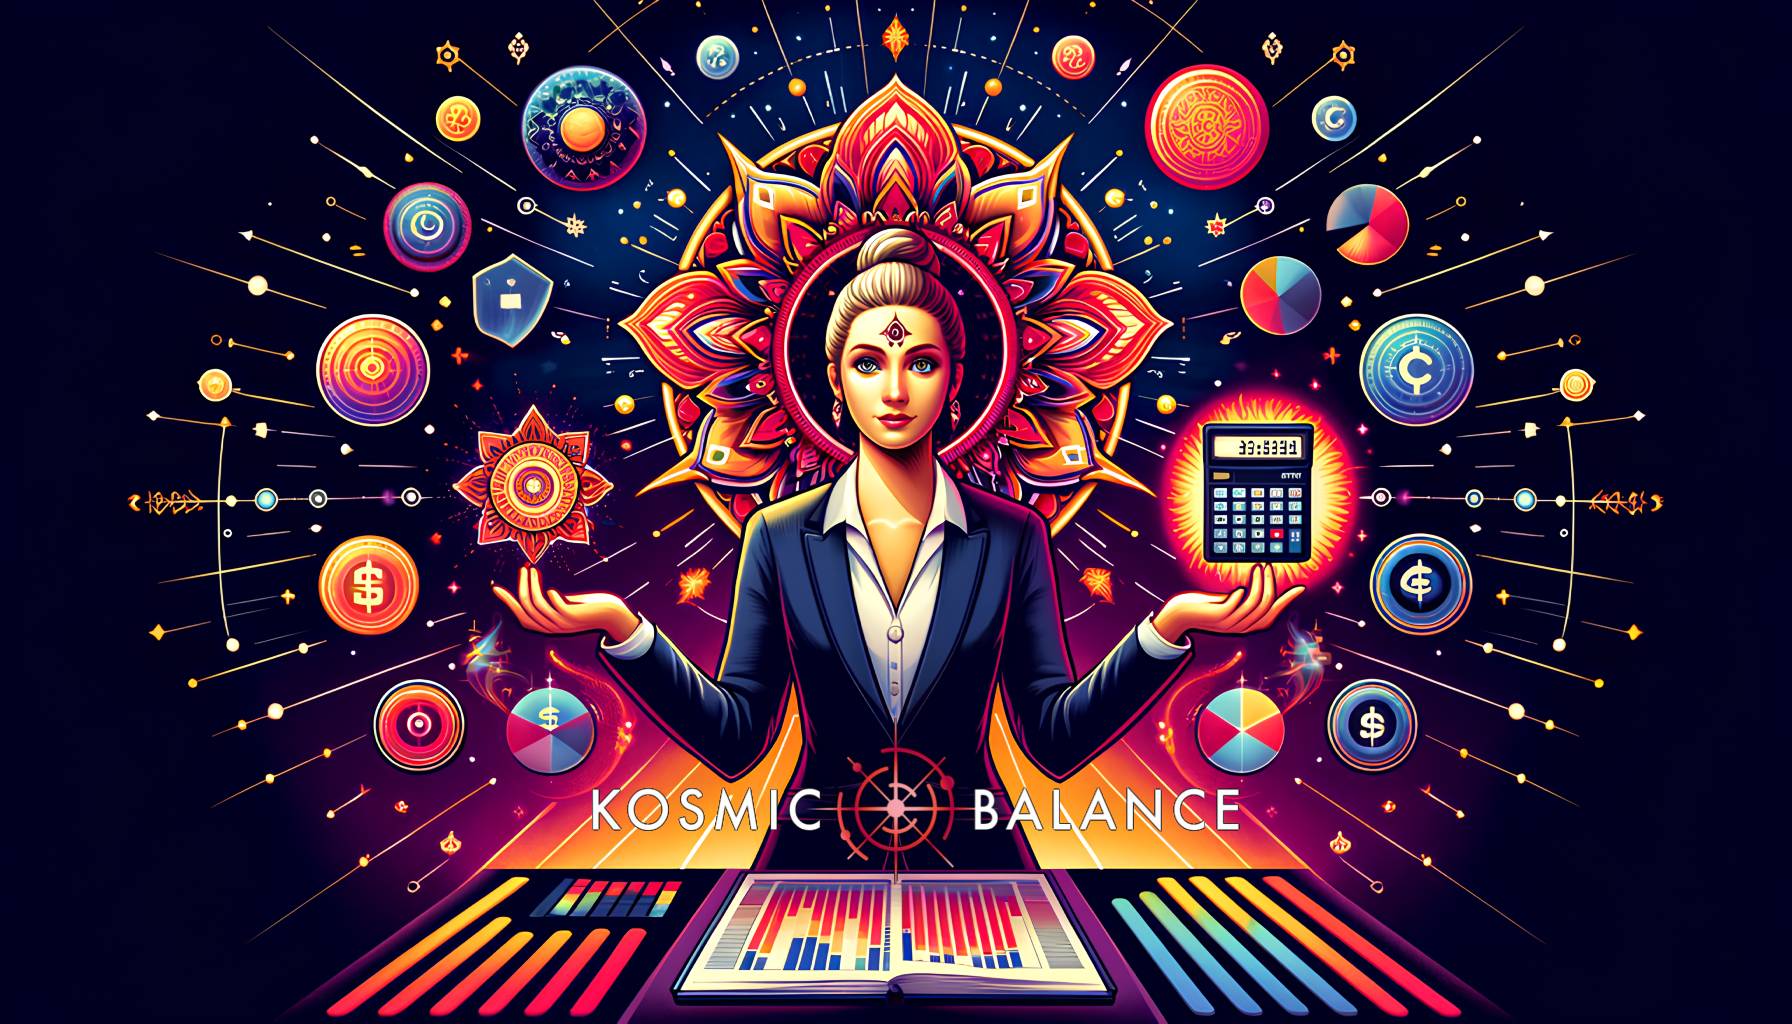 Kosmic Balance